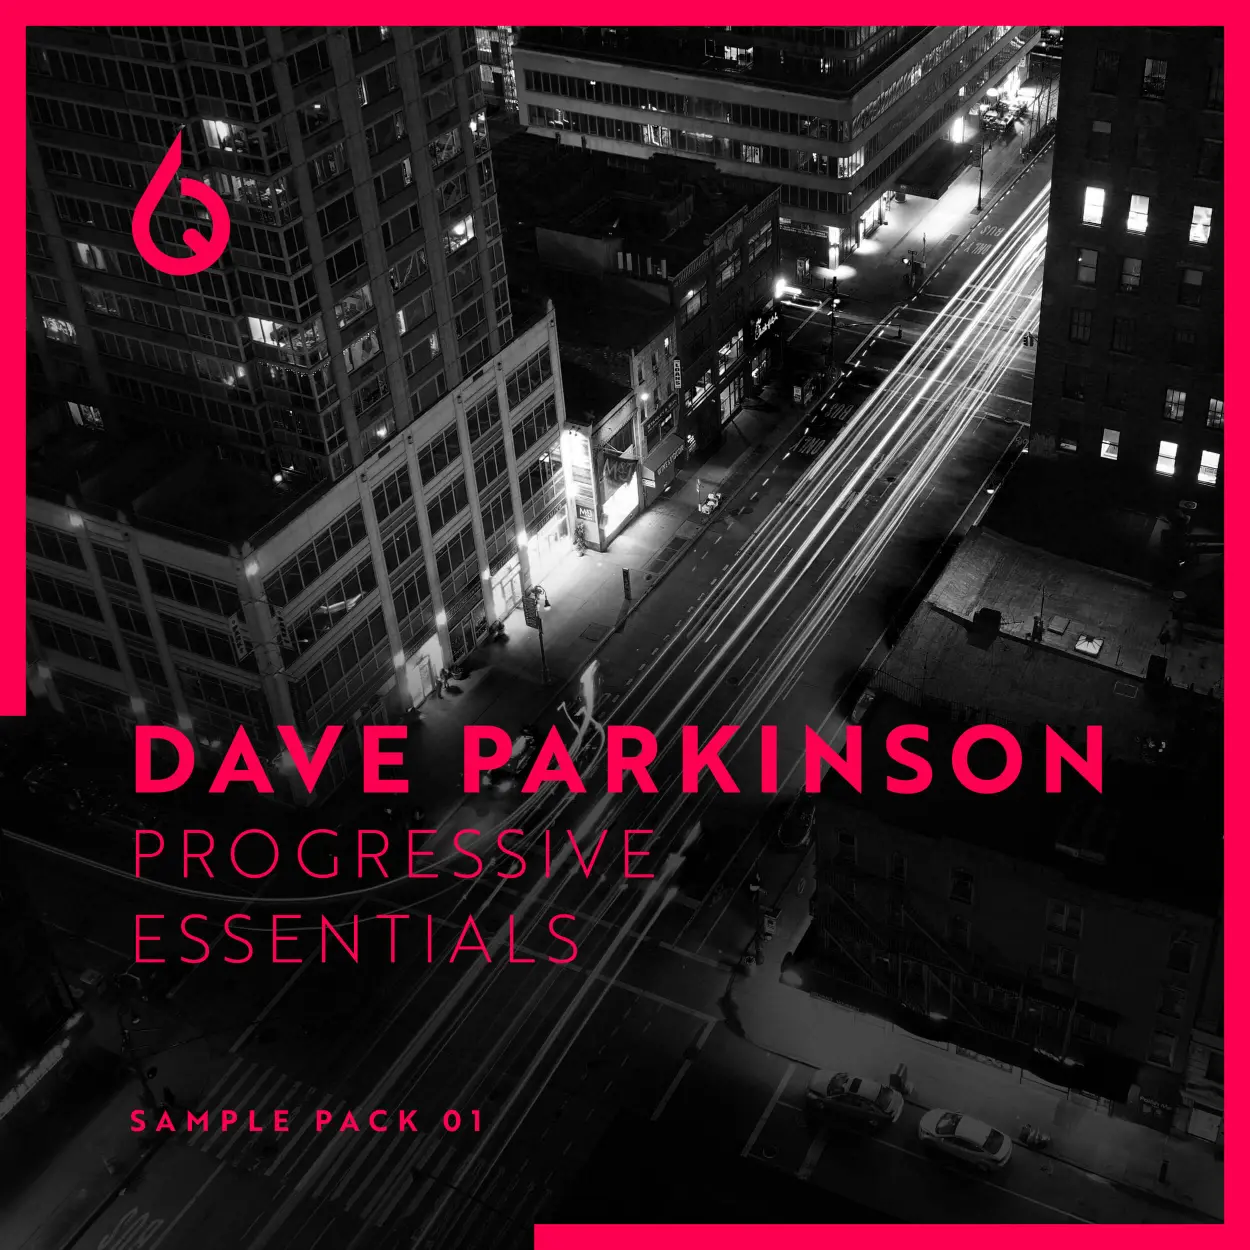 Dave Parkinson Progressive Essentials